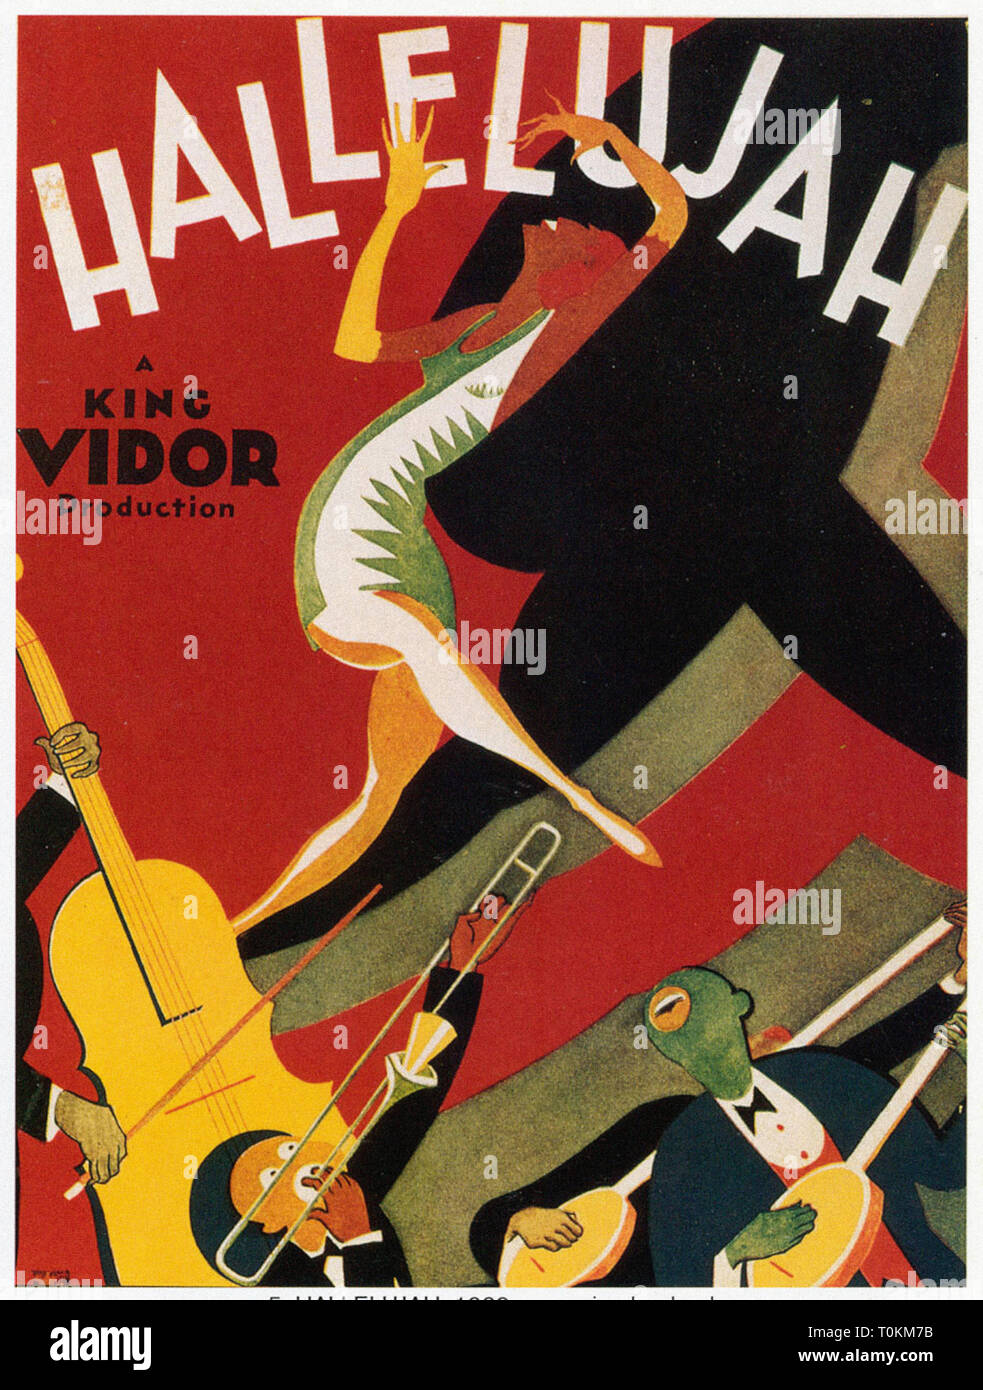 Hallelujah - Vintage pre-code silent movie poster Stock Photo - Alamy